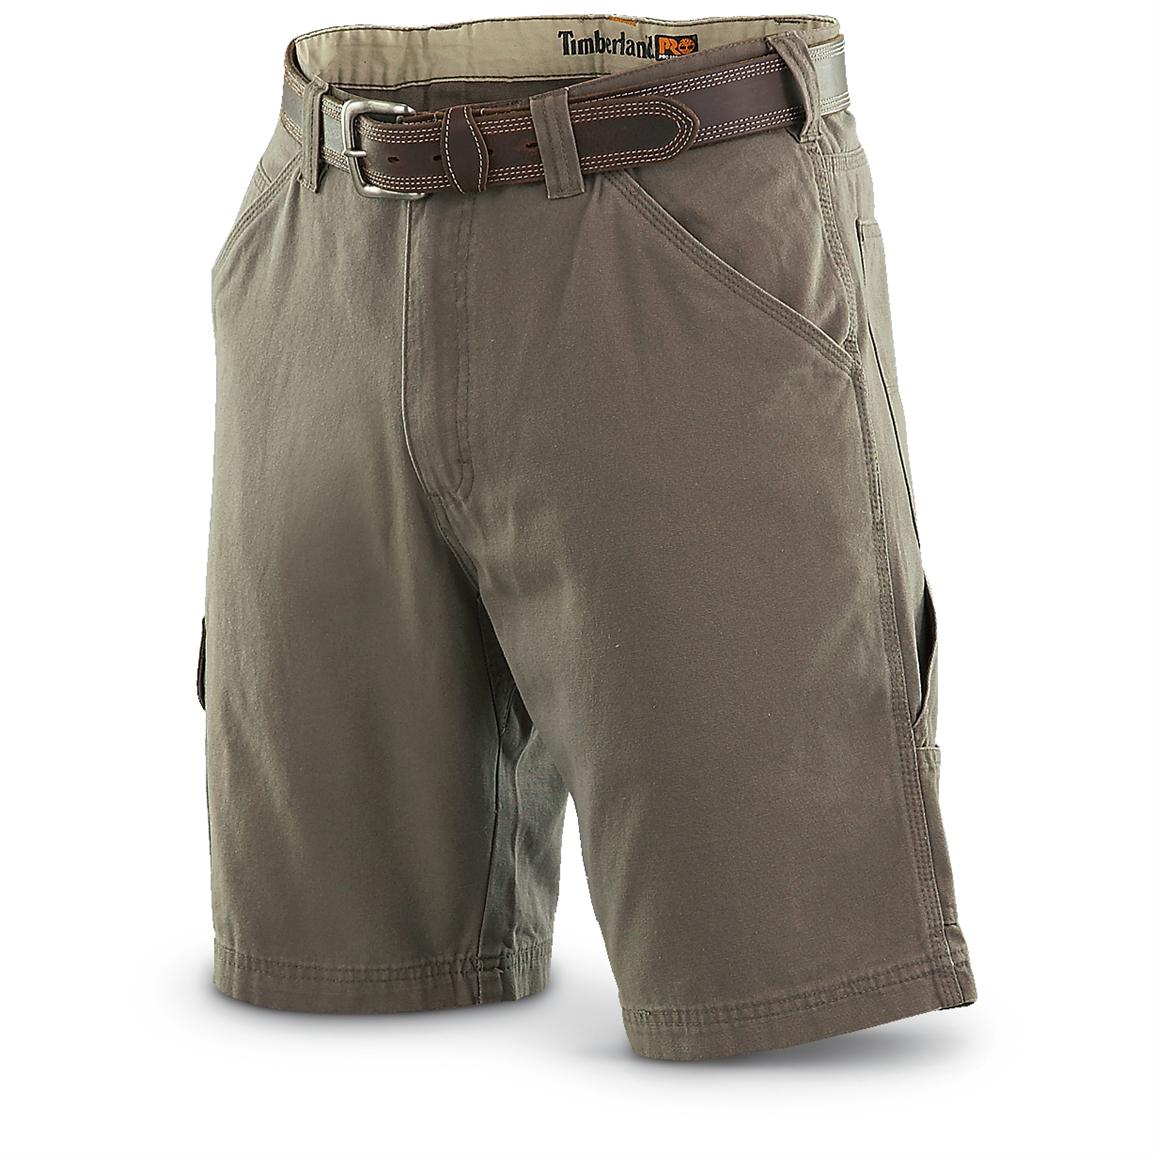 Timberland PRO® Carpenter Shorts - 187209, Shorts at Sportsman's Guide